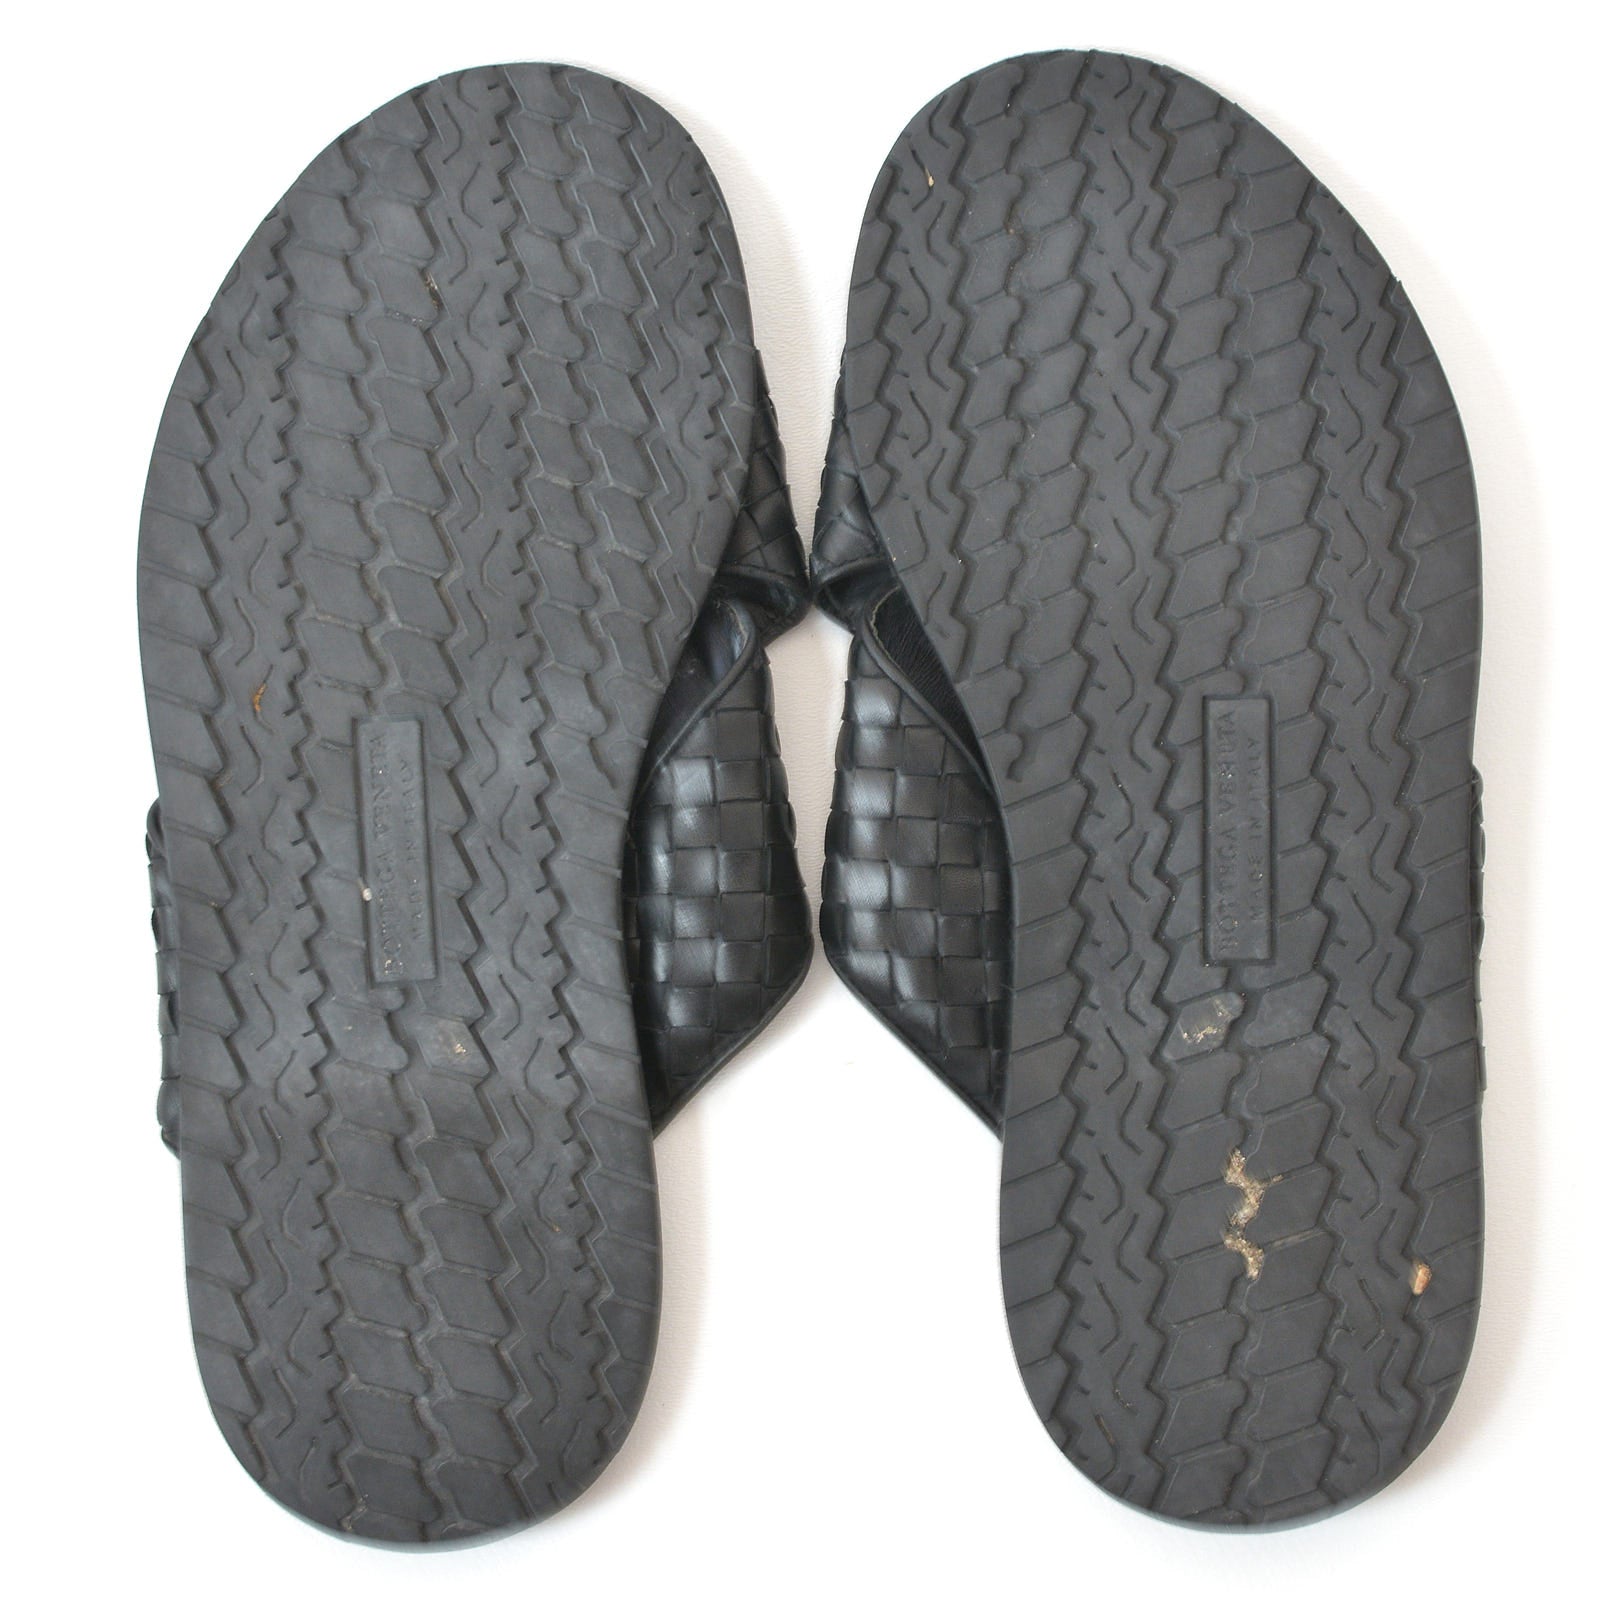 BOTTEGA VENETA Black Woven Calfskin Leather Slipper Sandal Shoes Size? BOTTEGA VENETA